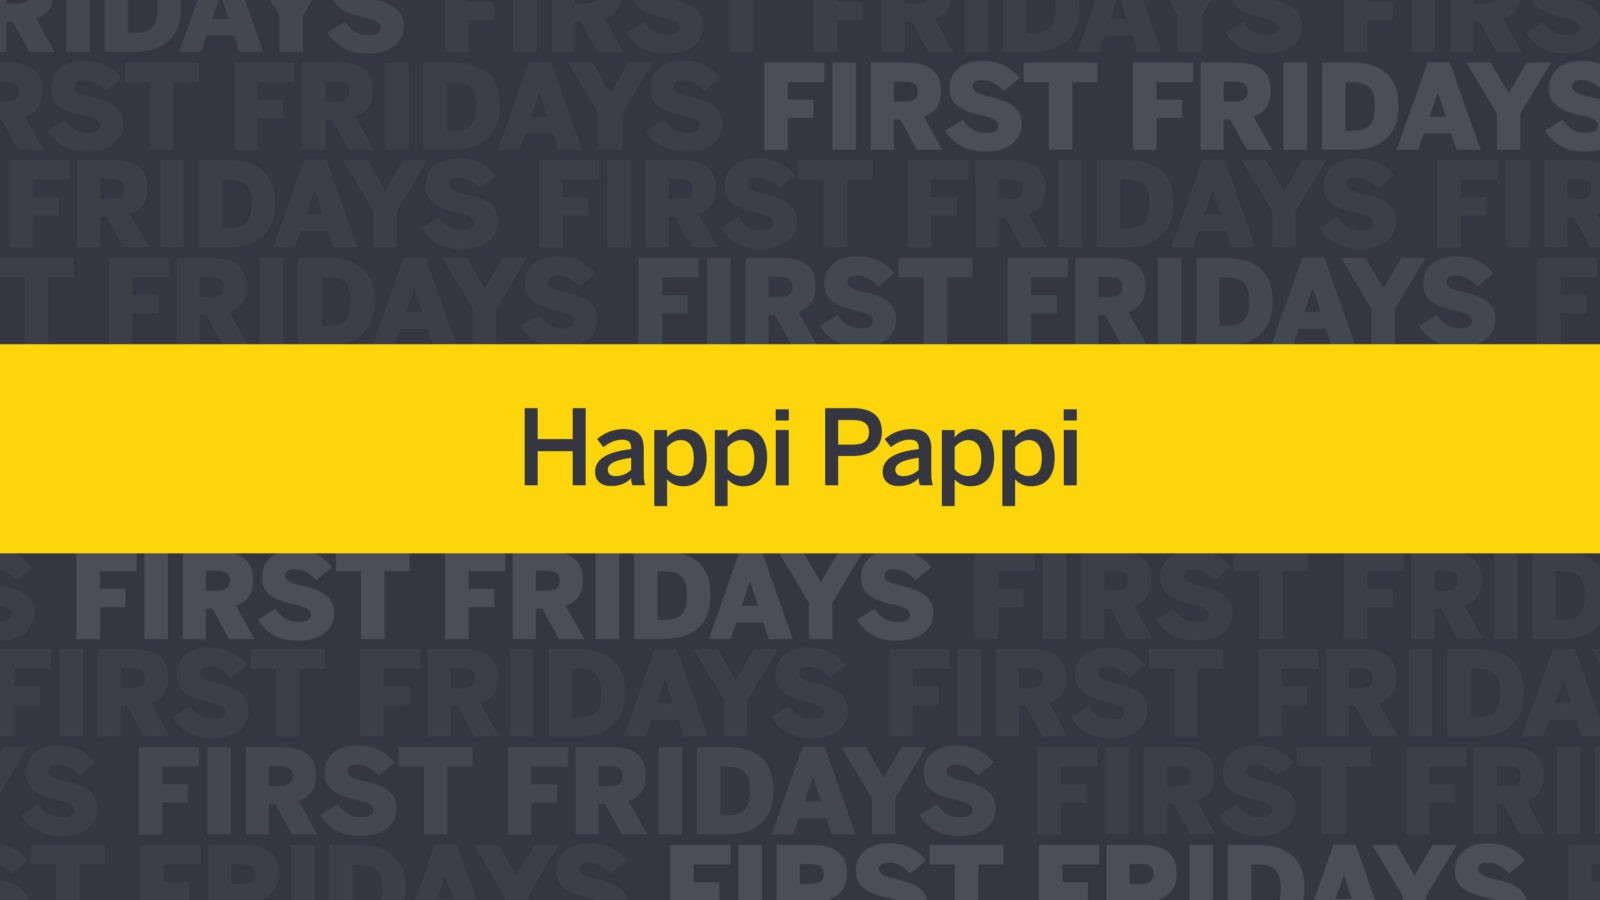 First Fridays: Happi Pappi